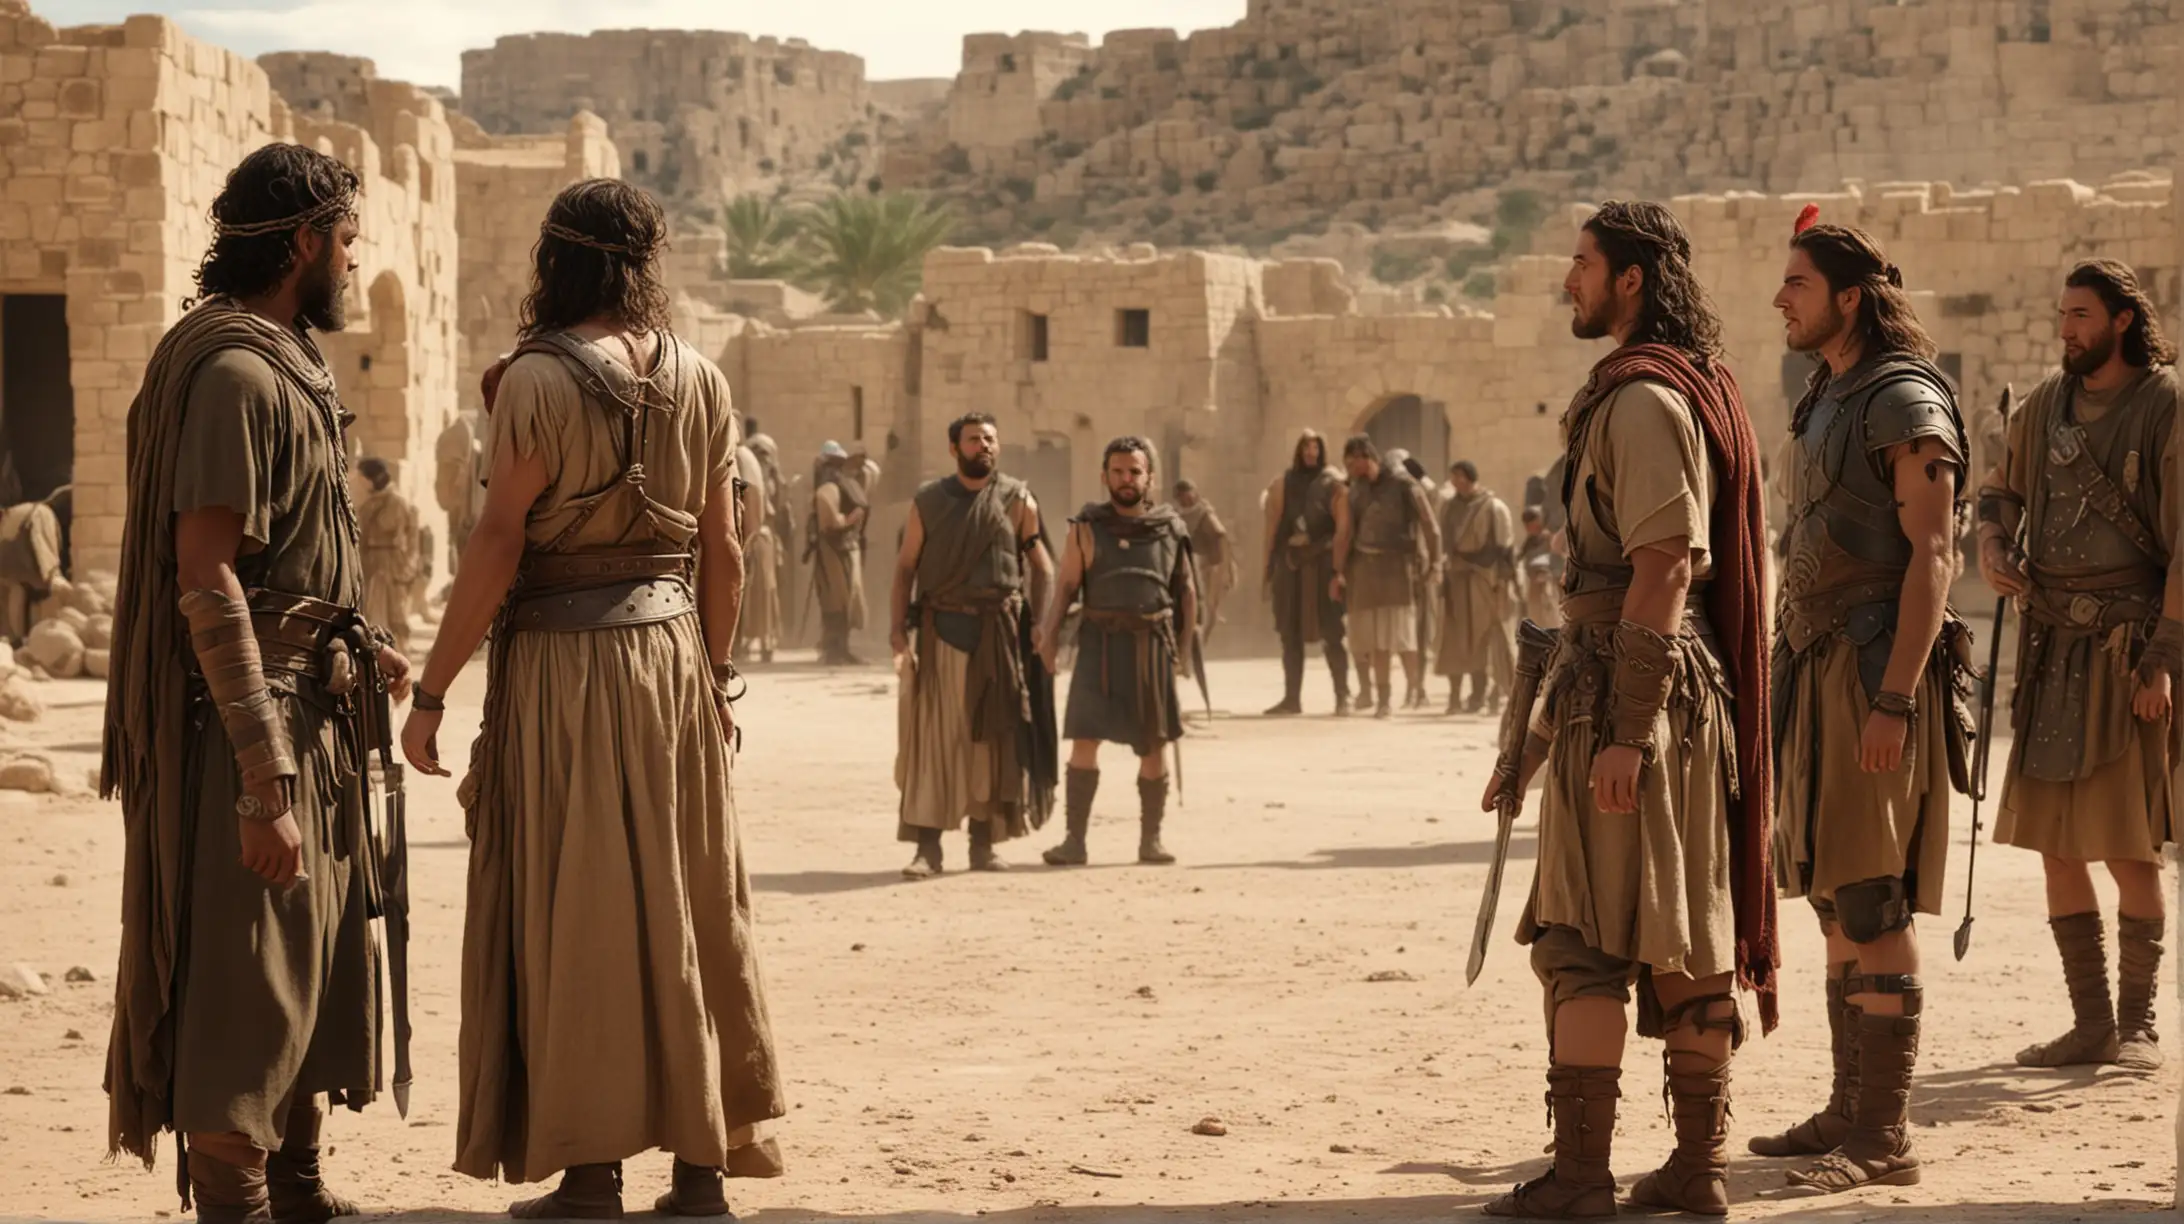 Woman Talking to Warriors in a Biblical Desert City